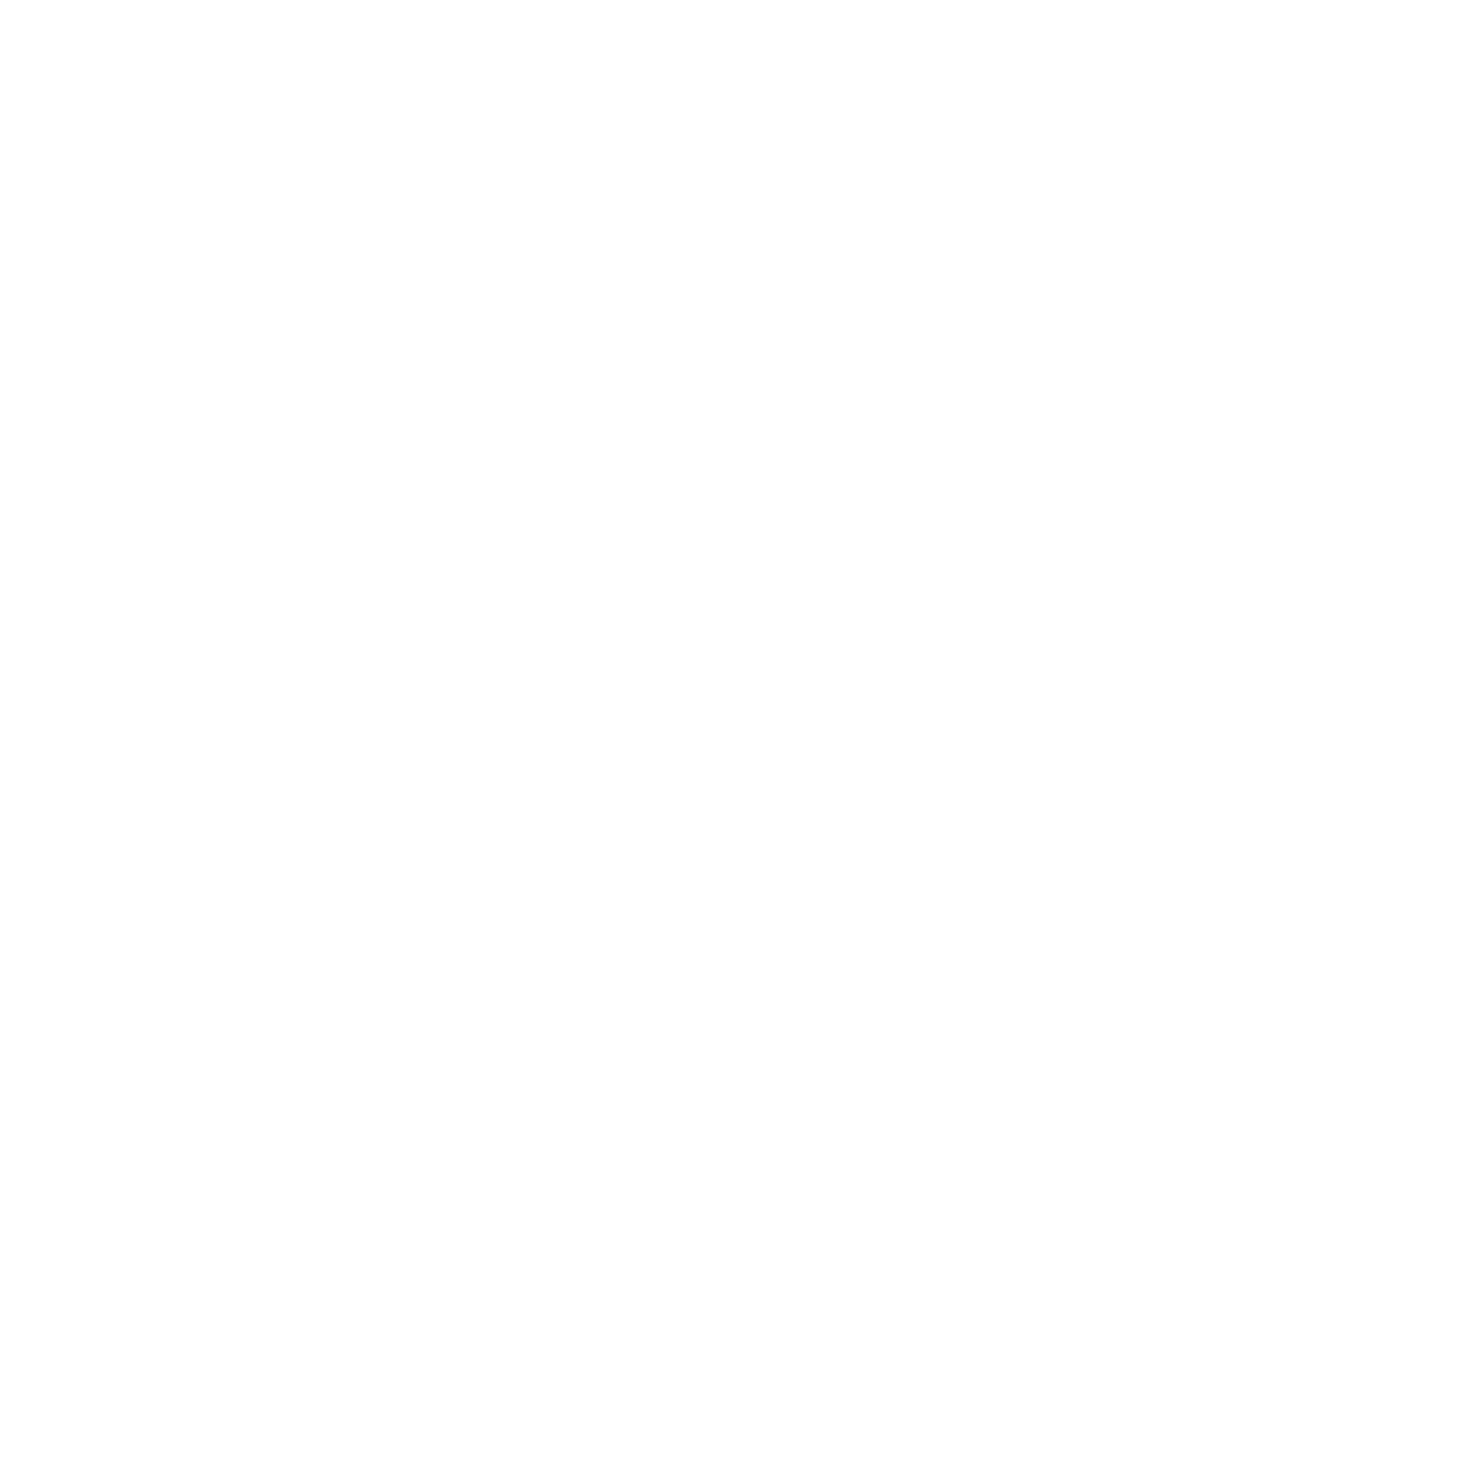 chowbus_logo_text_white-92f15231e6e919cdc31edf10a86999cb.png